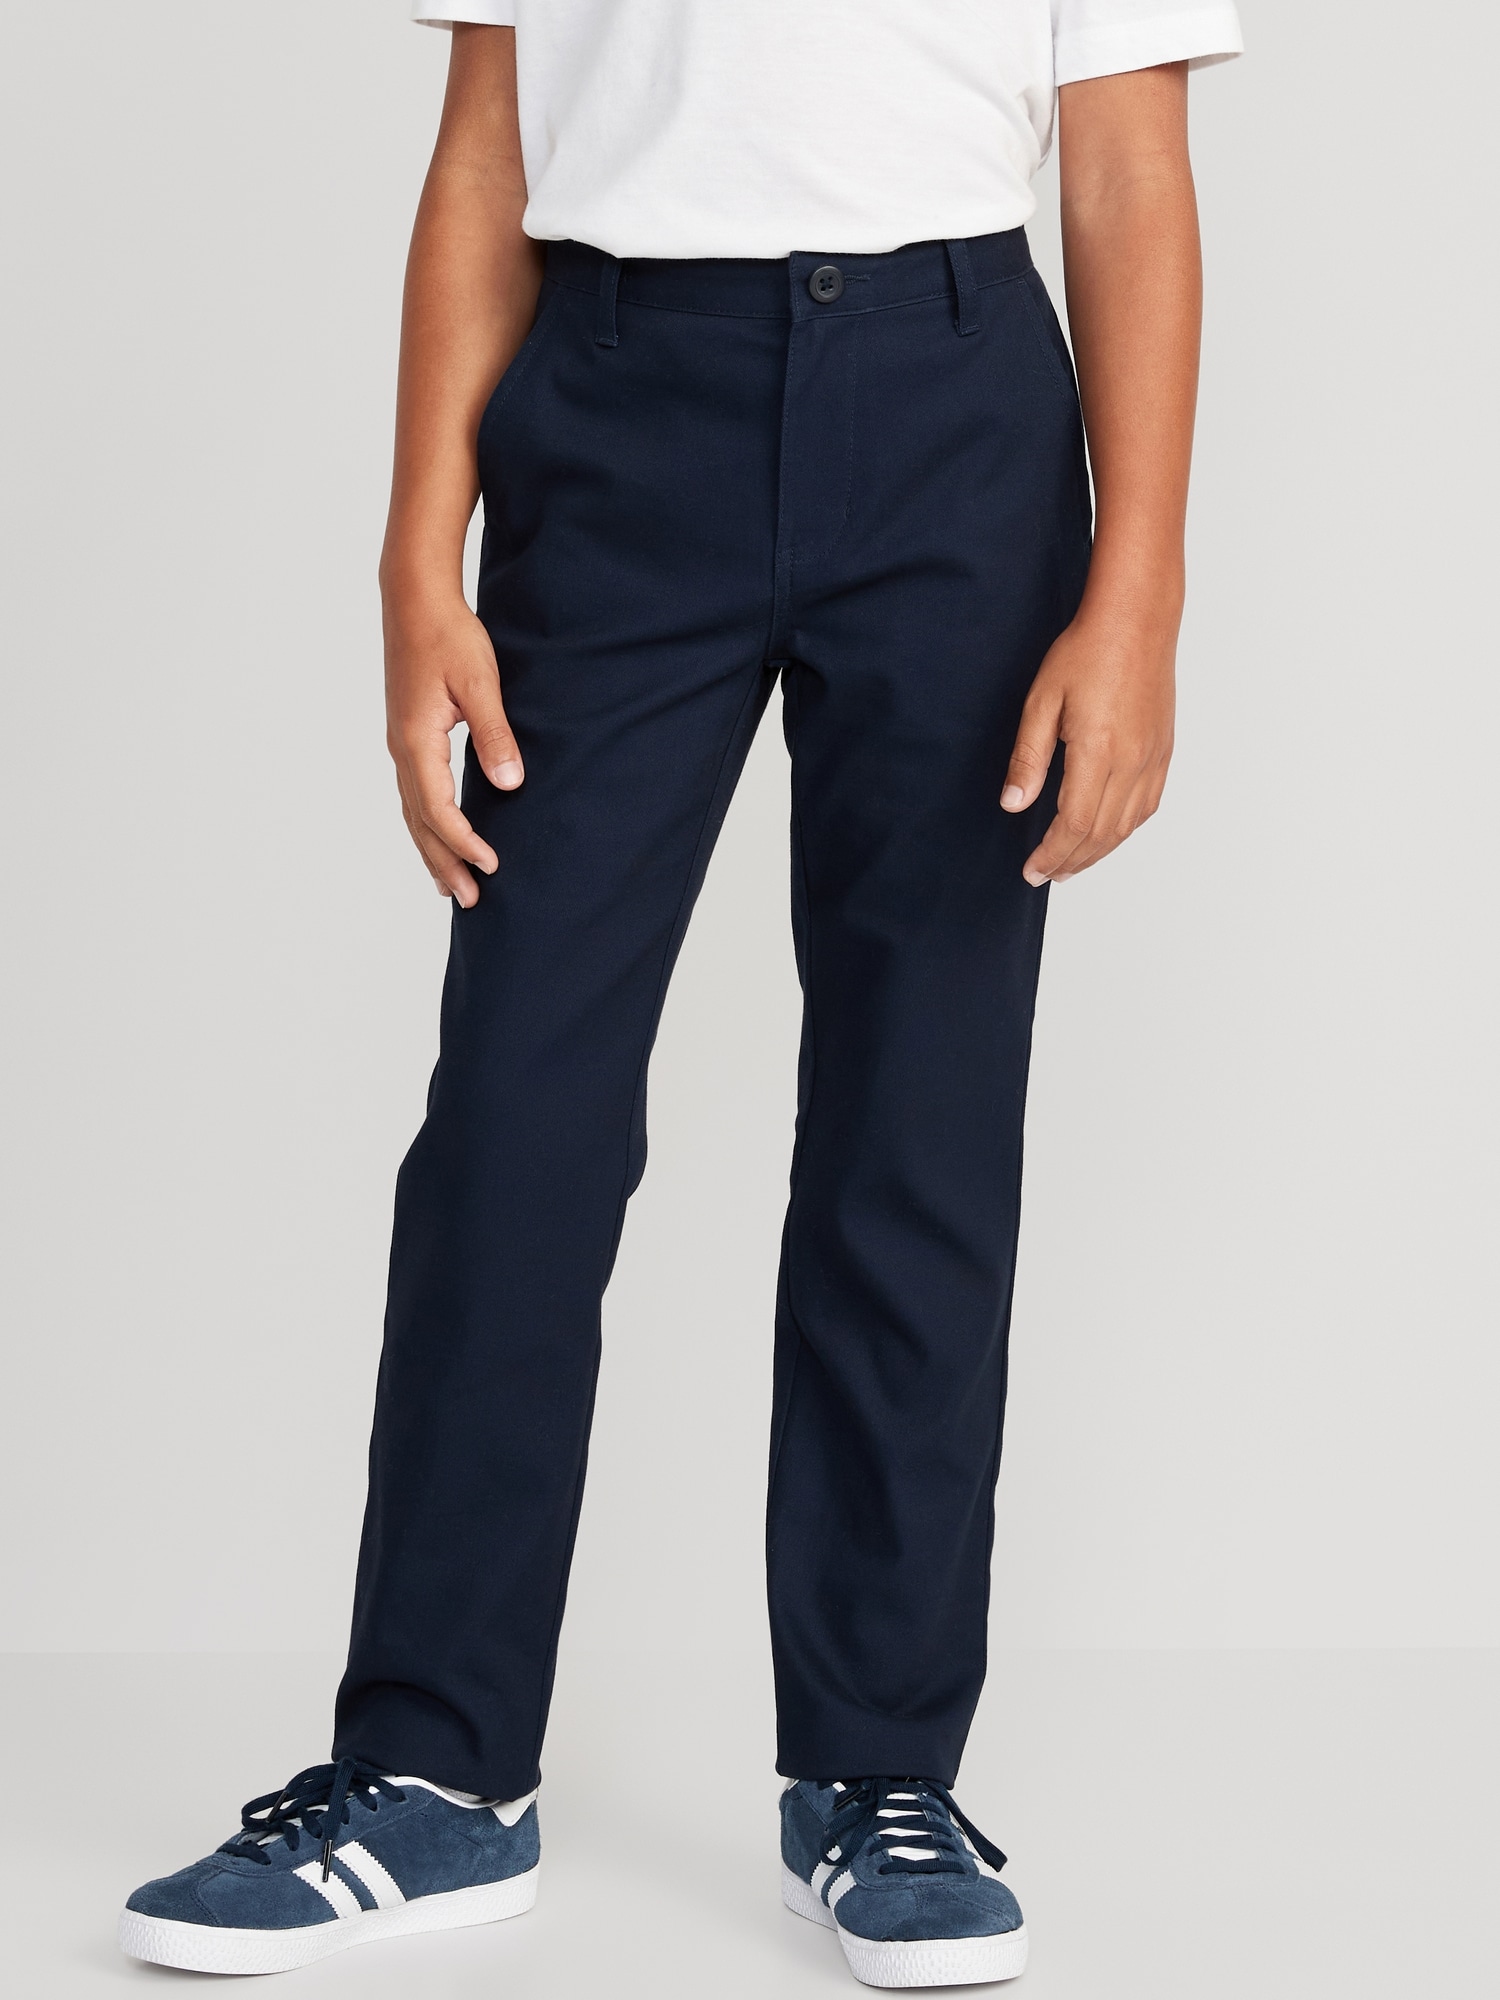 Boys Uniform Pants School Trousers Full Elastic Waist Kids Pull Up Pocket  2-13Yr | eBay